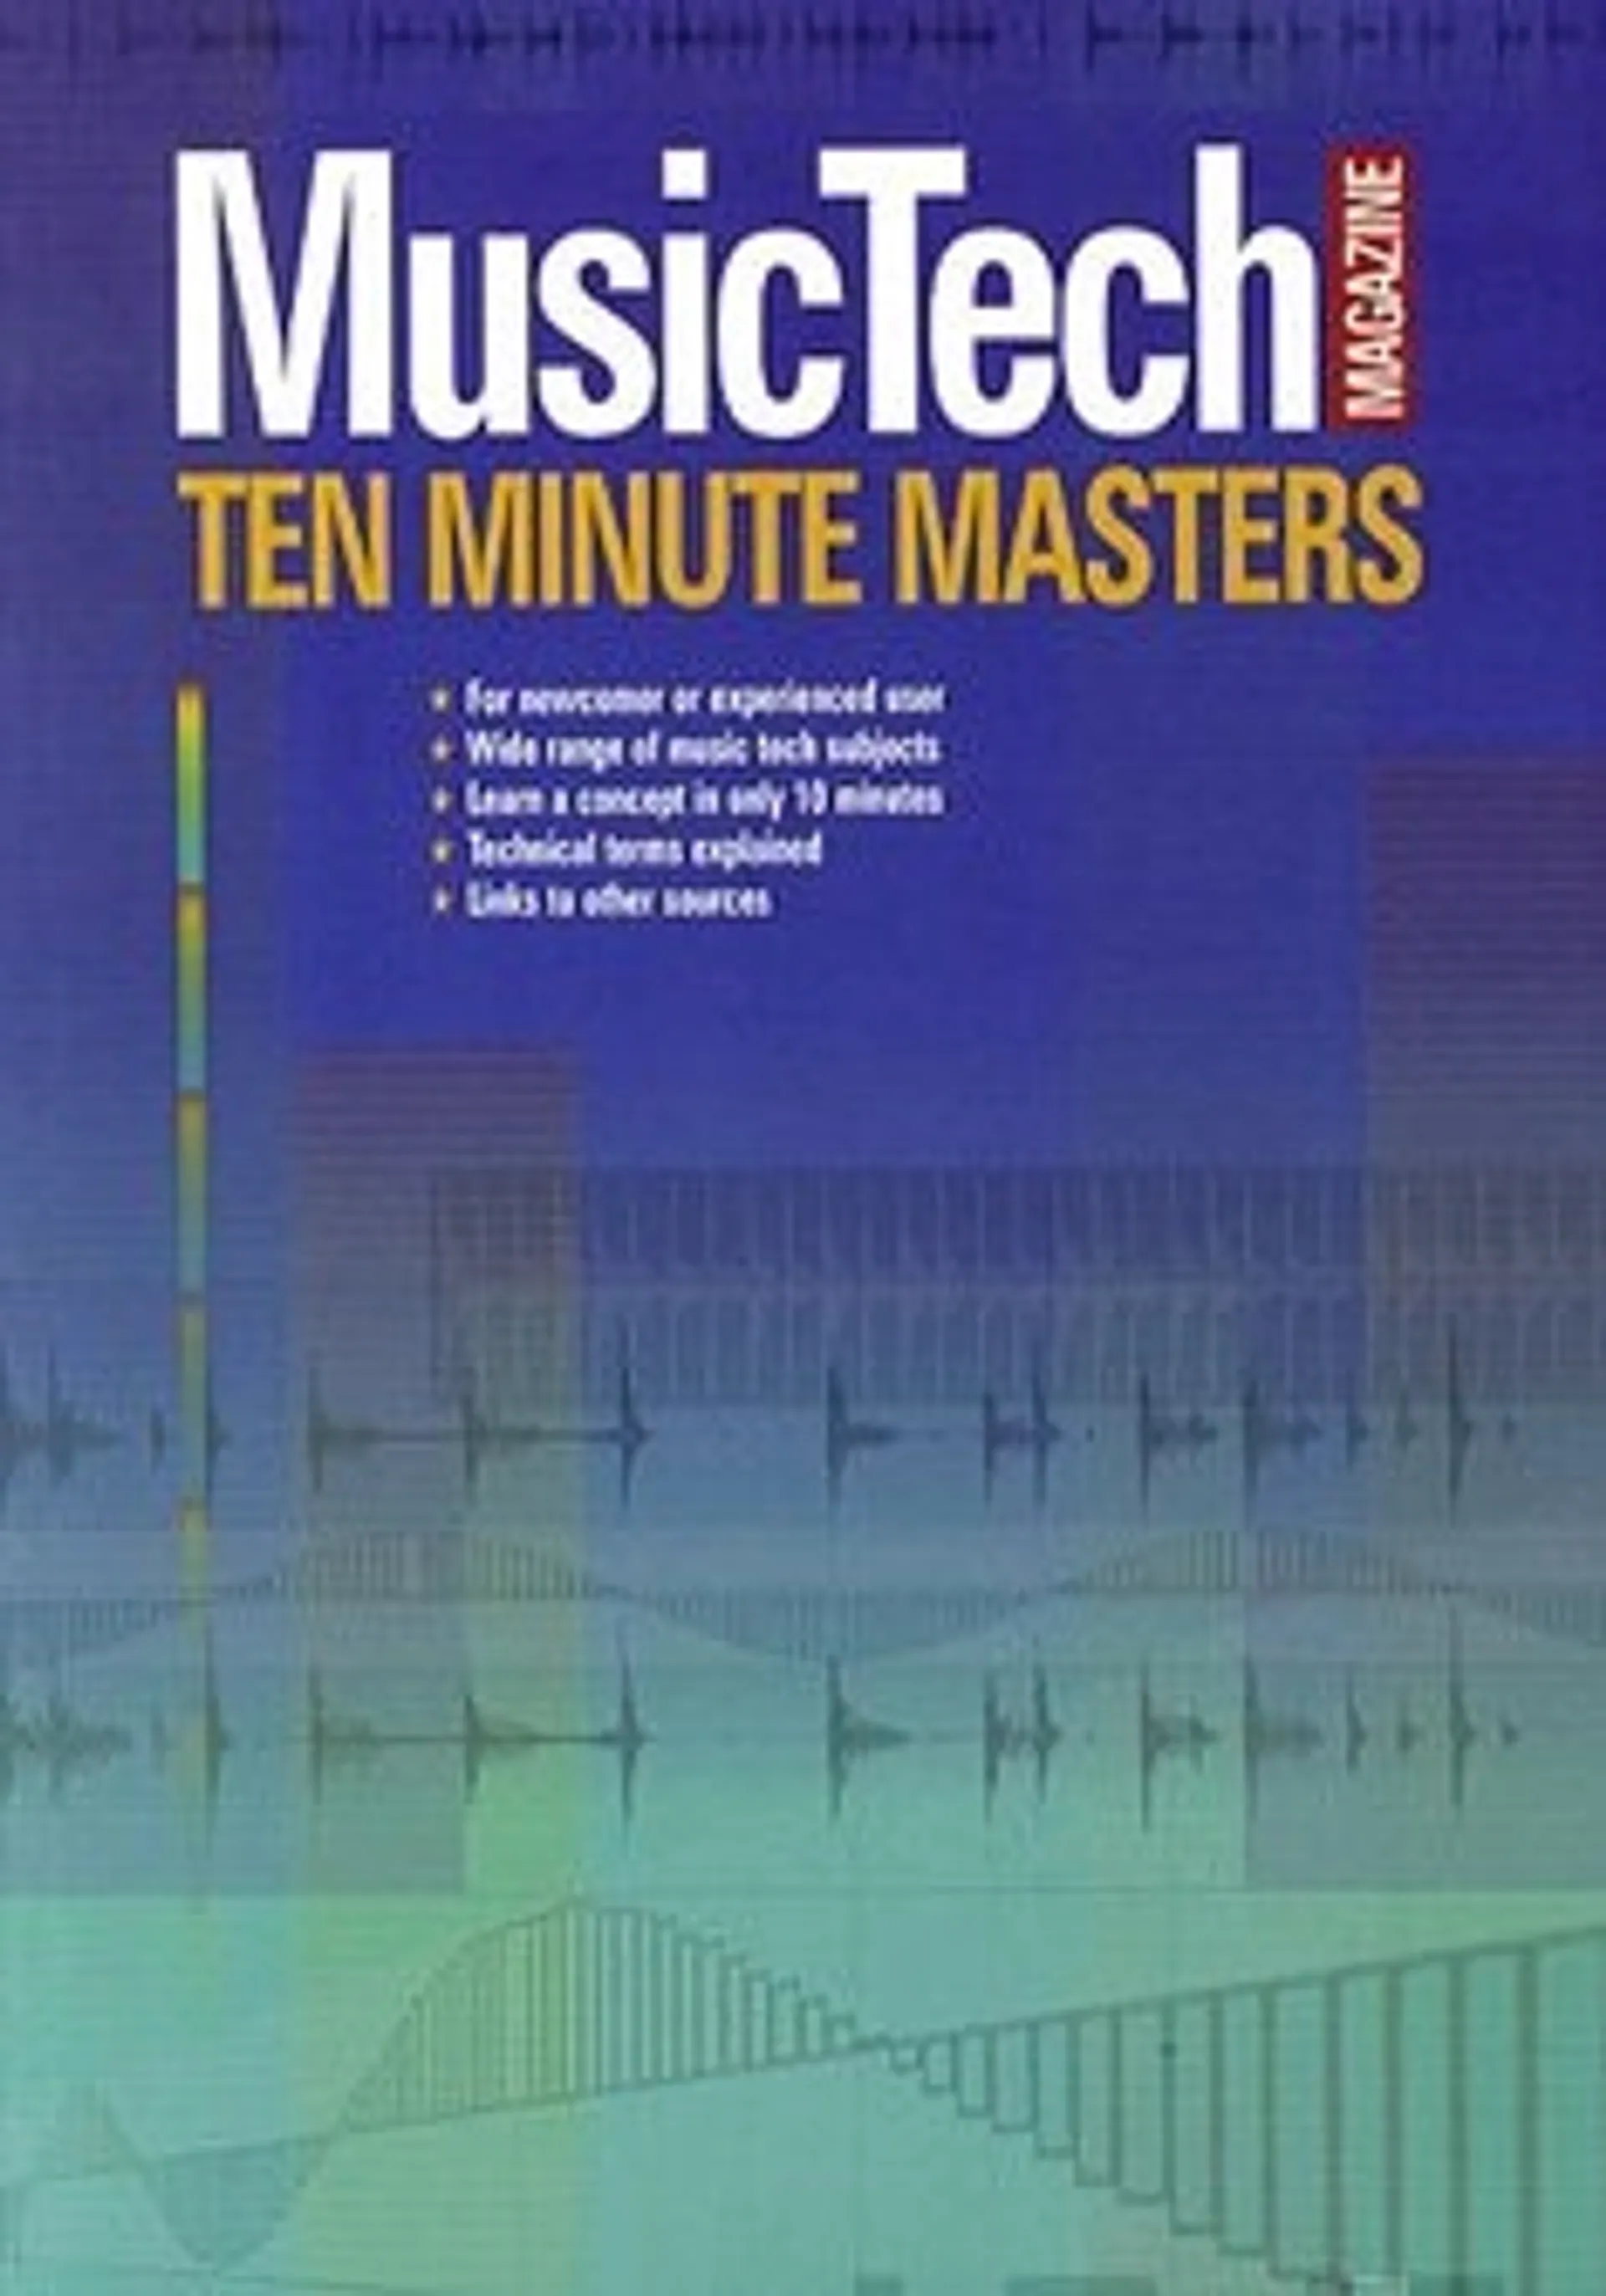 Musictech magazine